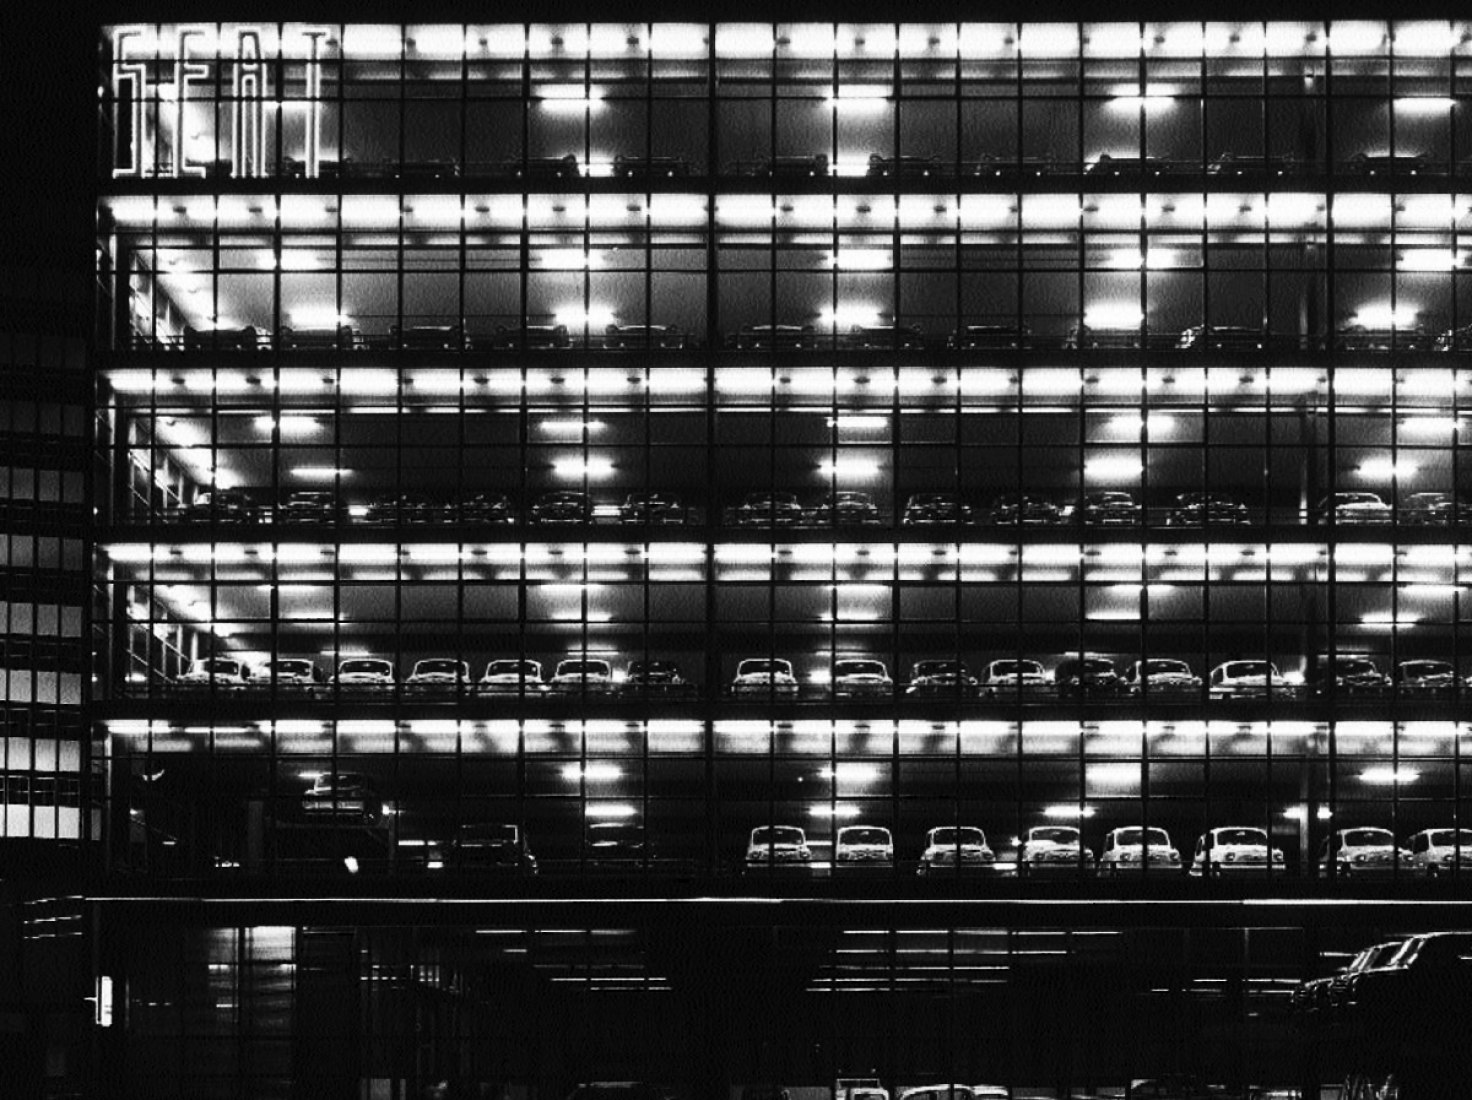 1958. SEAT headquarters in Barcelona. Spain. Architects: C. Ortiz-Echagüe and R. Echaide